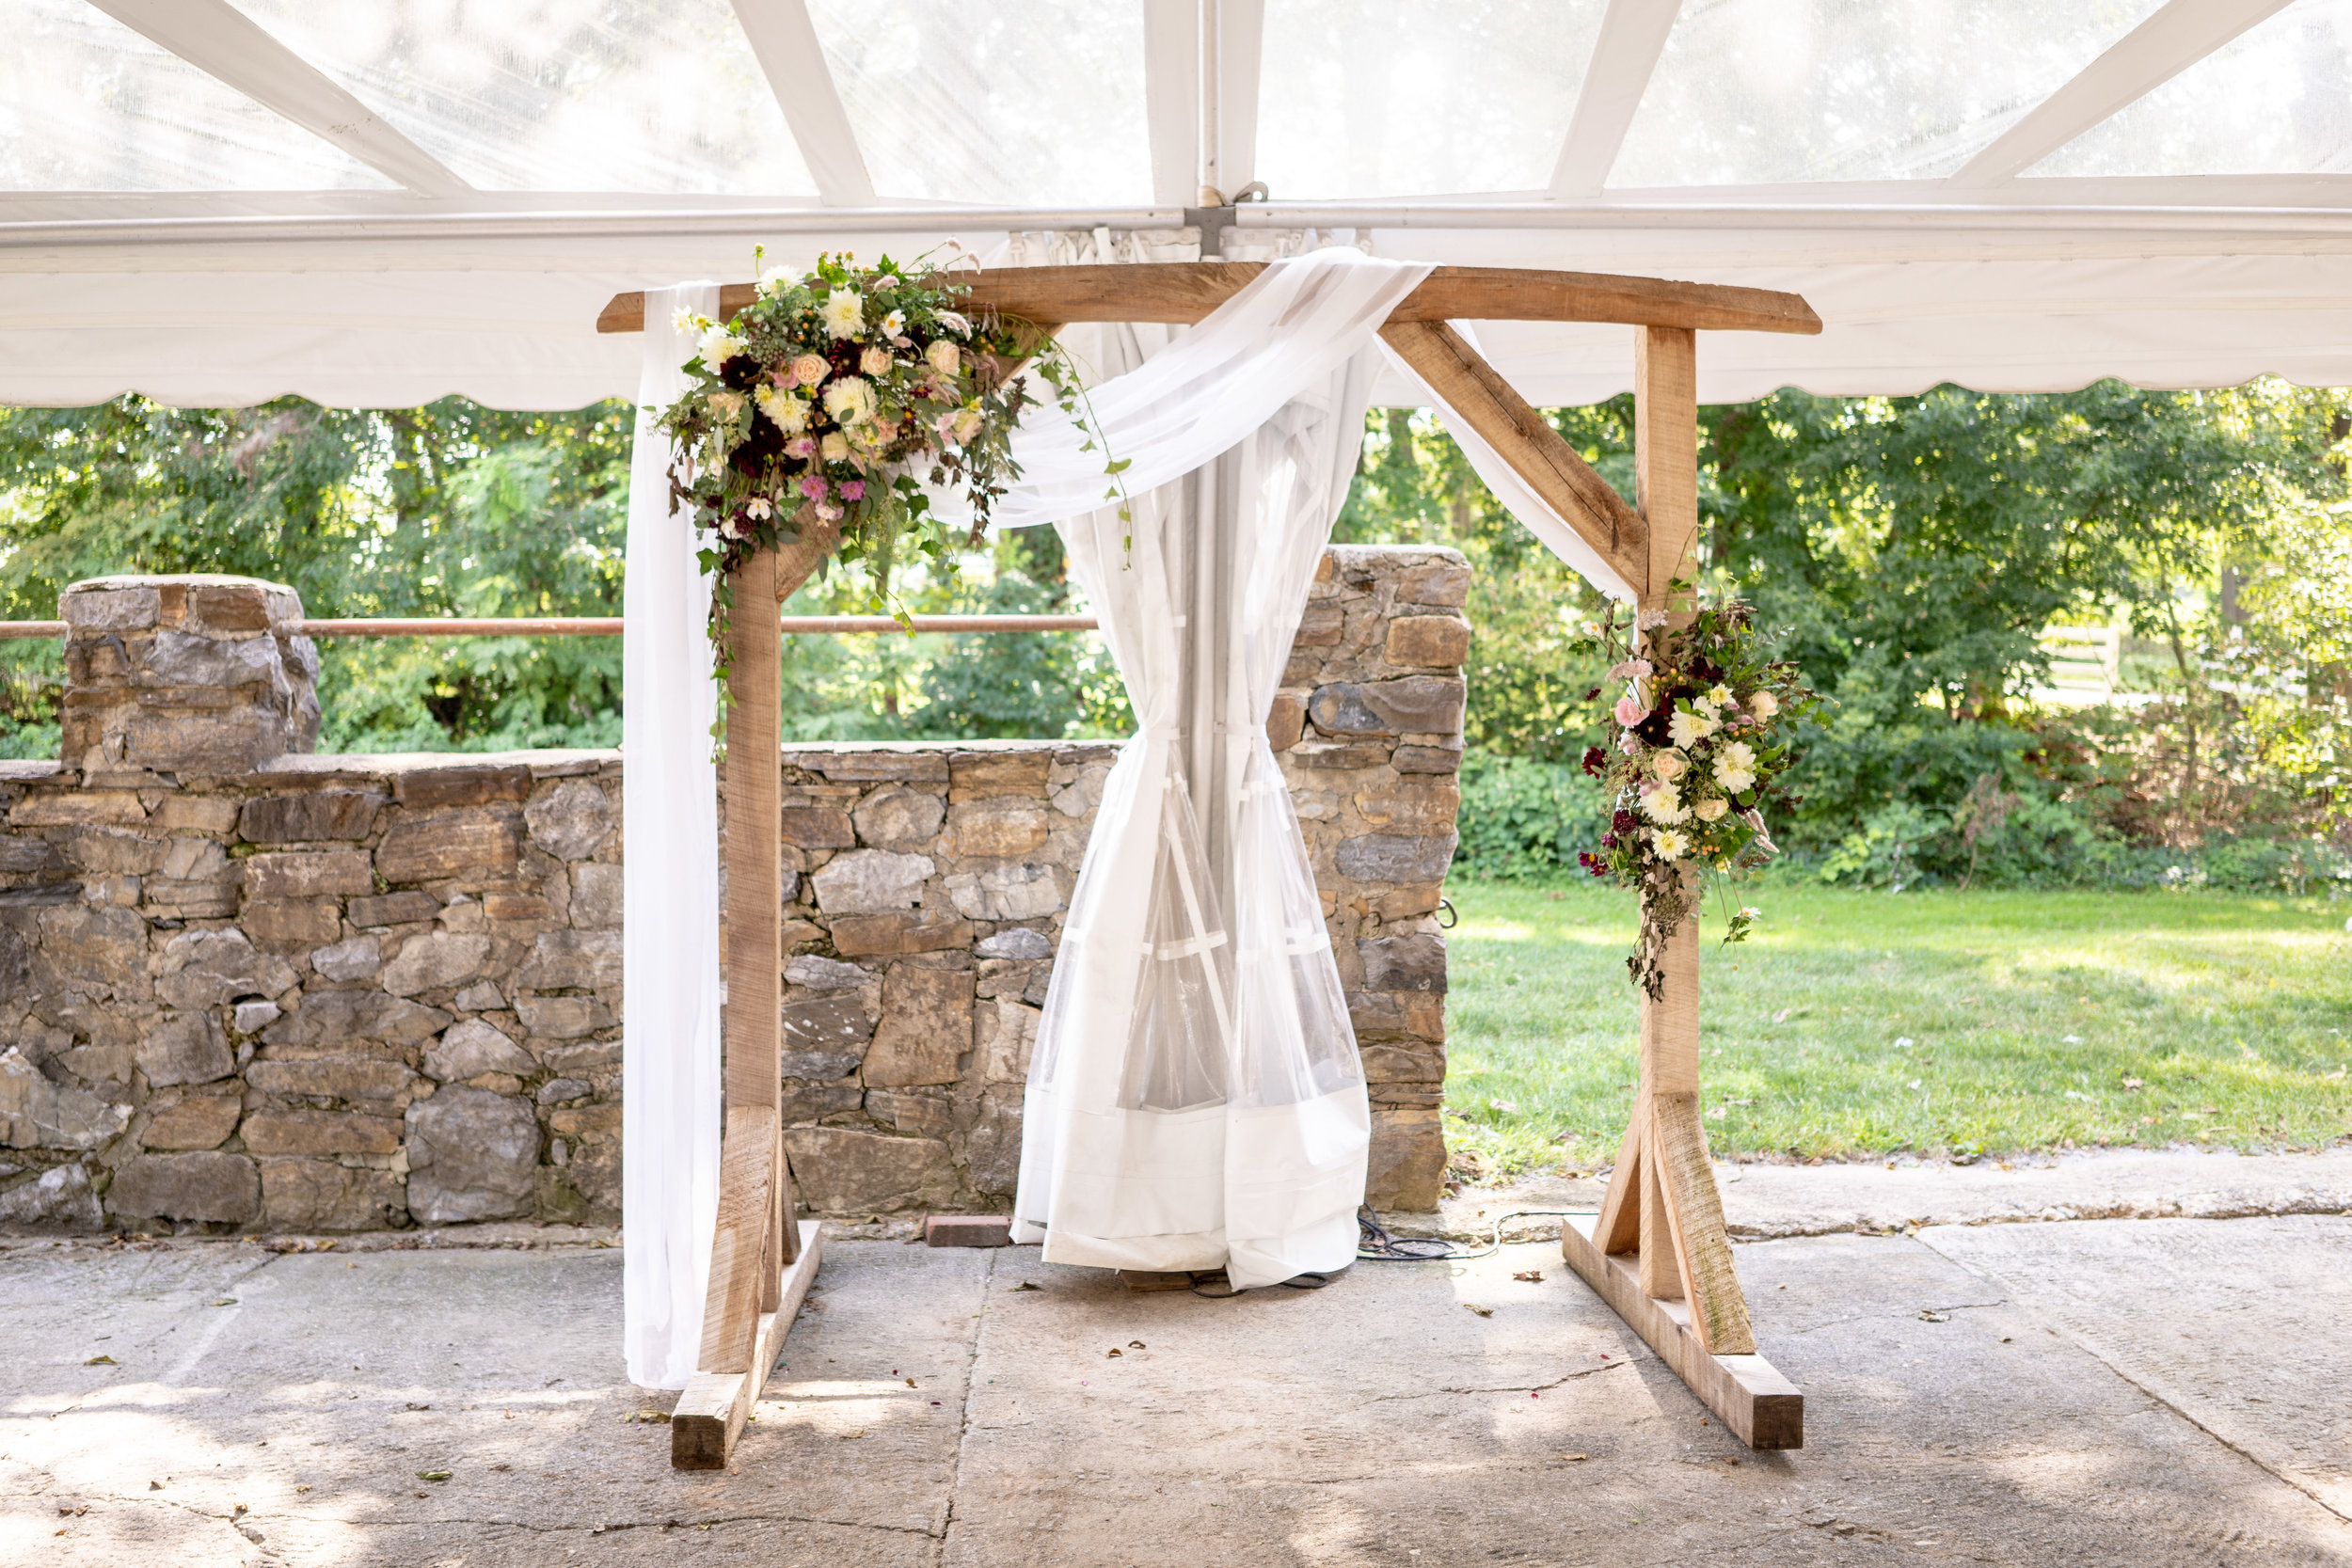 Wedding arch gazebo decoration flowers centerpieces greenery blush rustic 